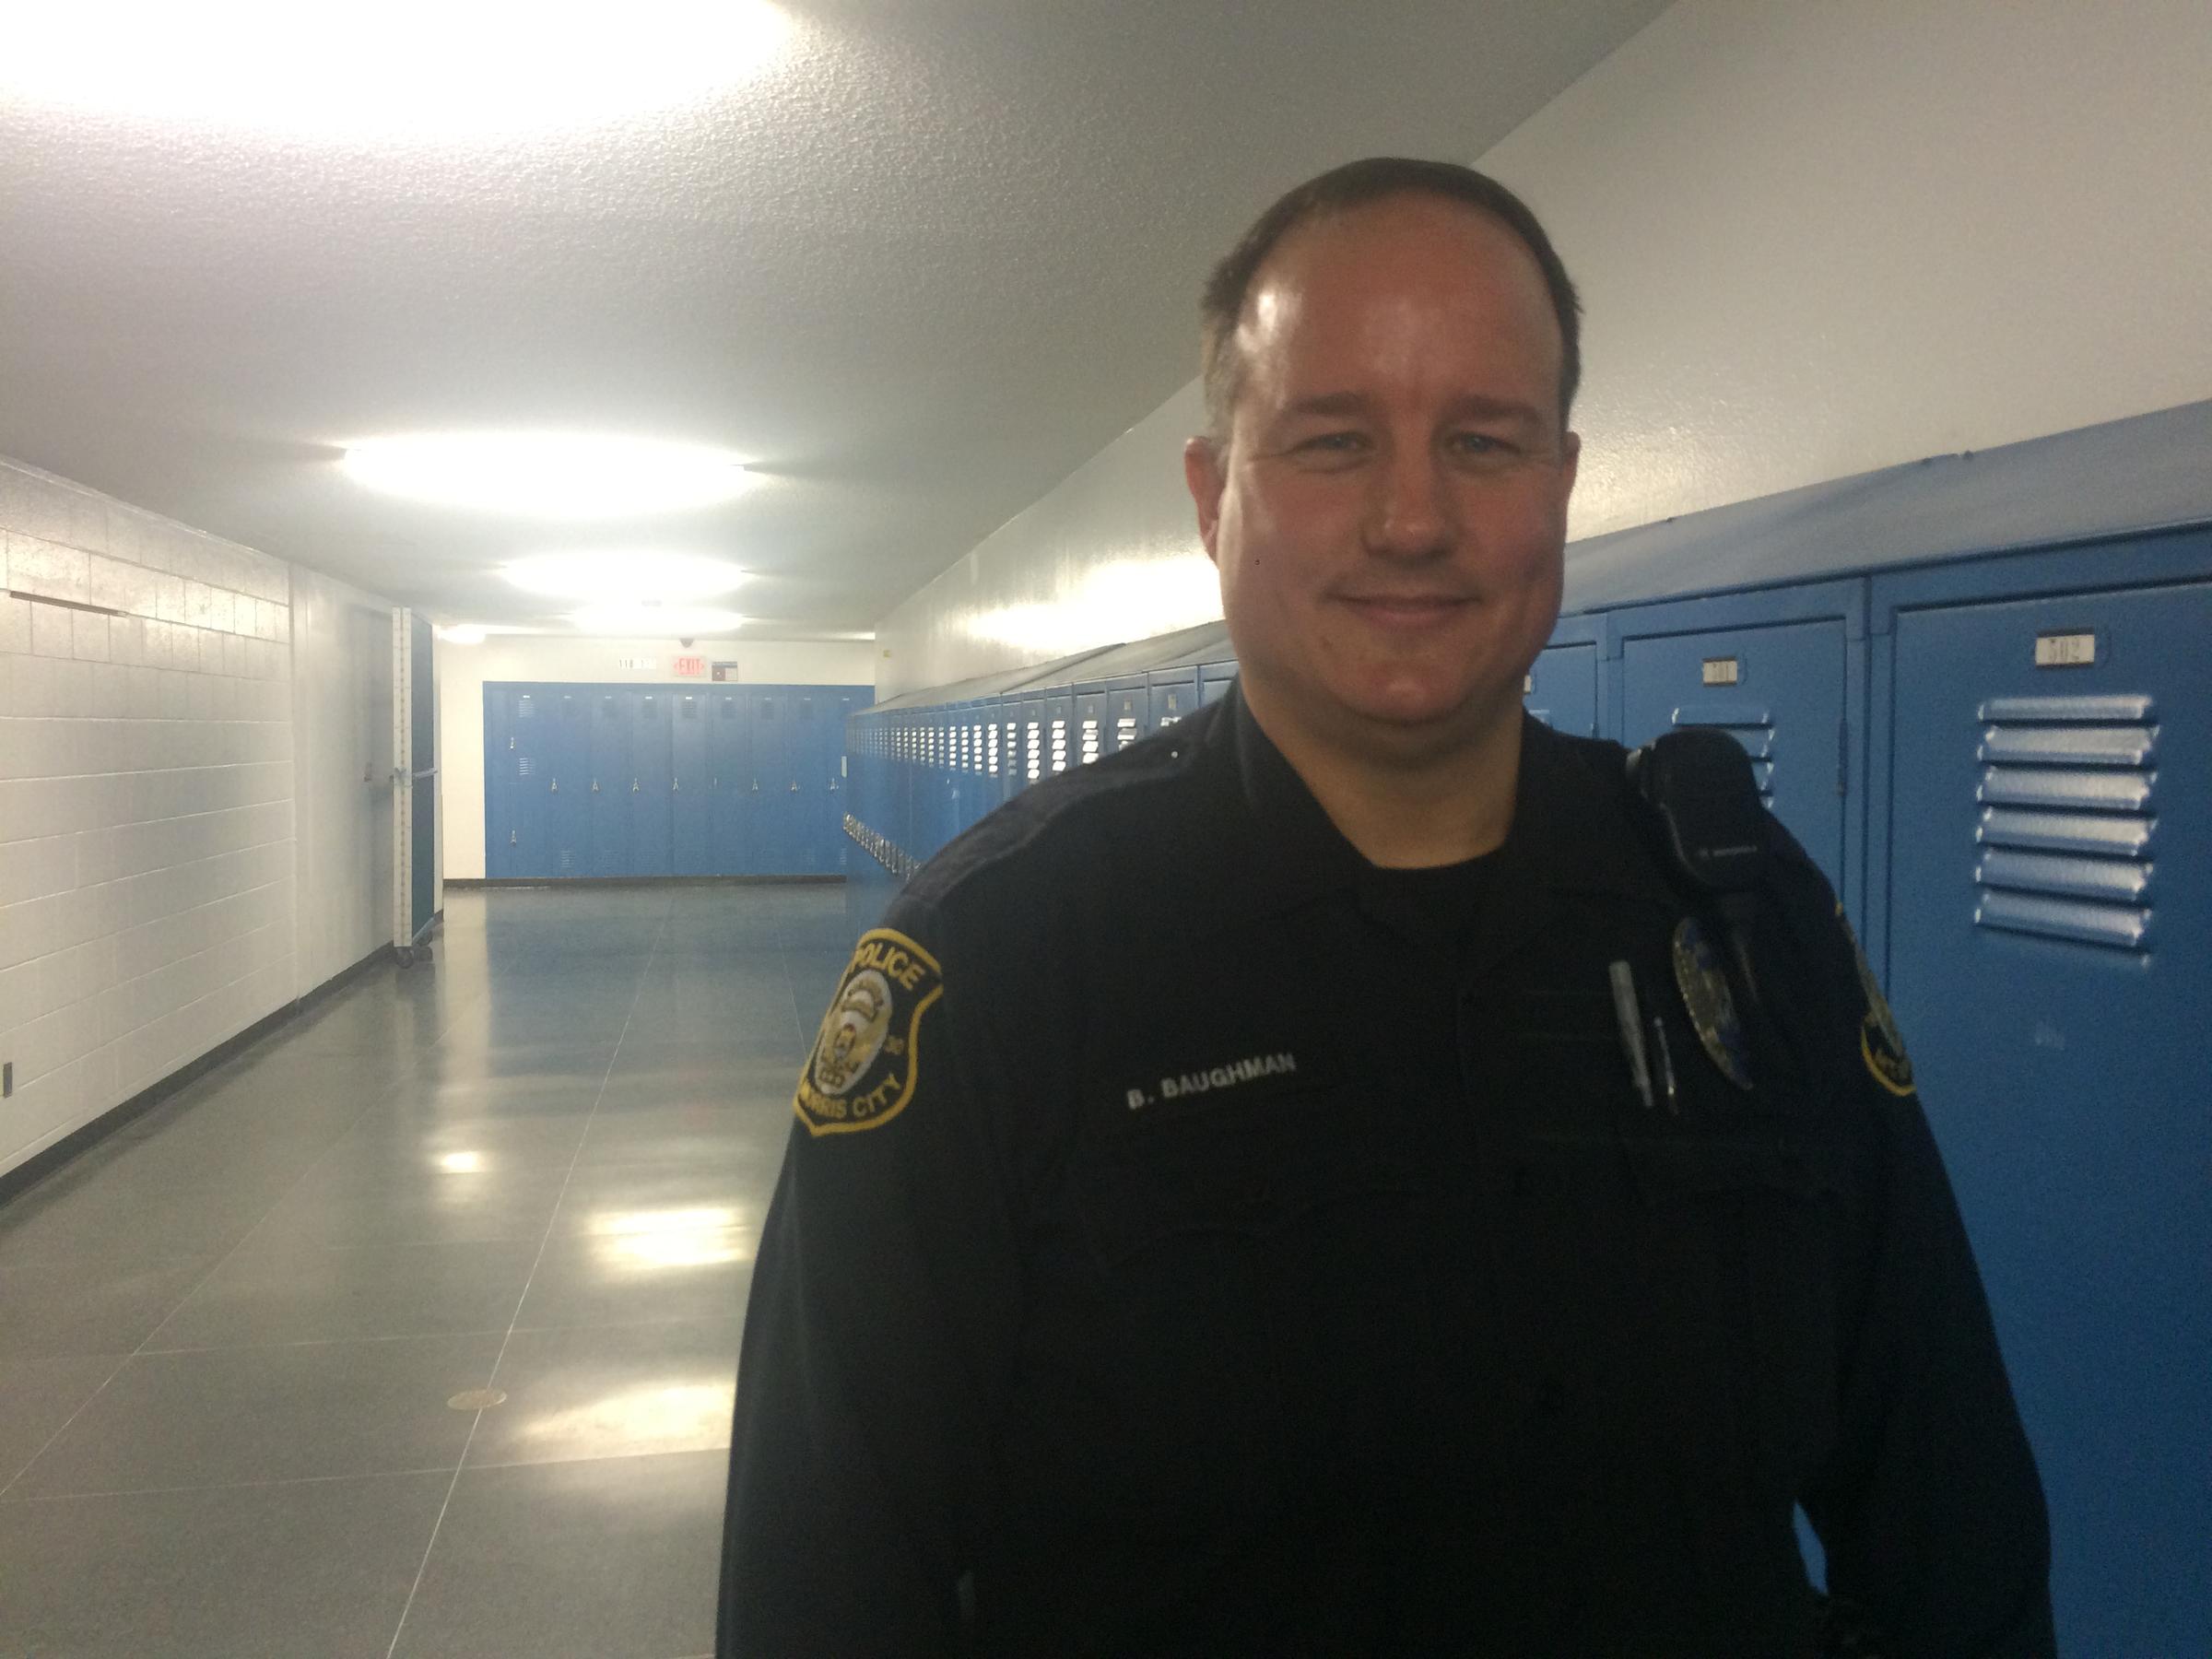 Do cops belong in Michigan classrooms?